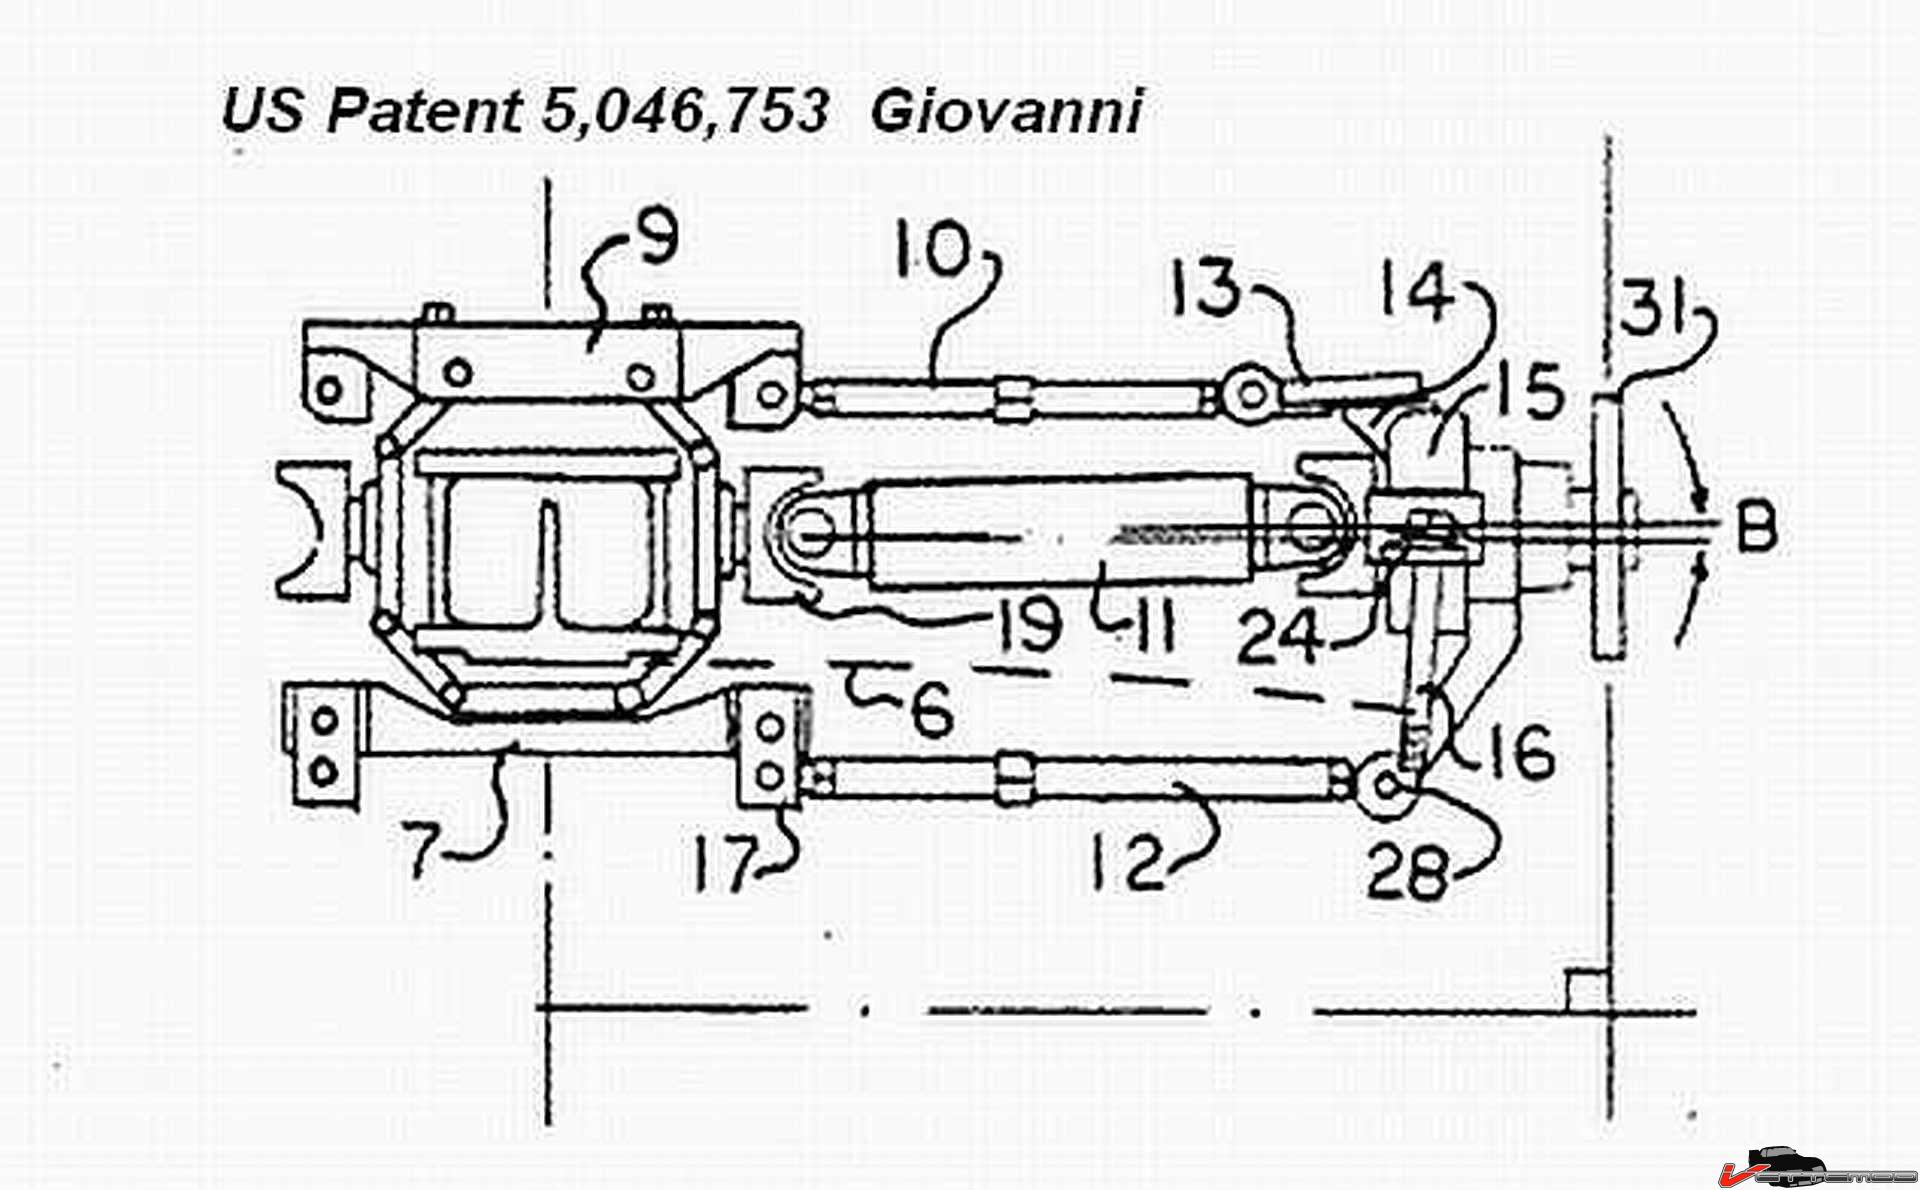 Giovanni Rear Suspension Diagram.jpg